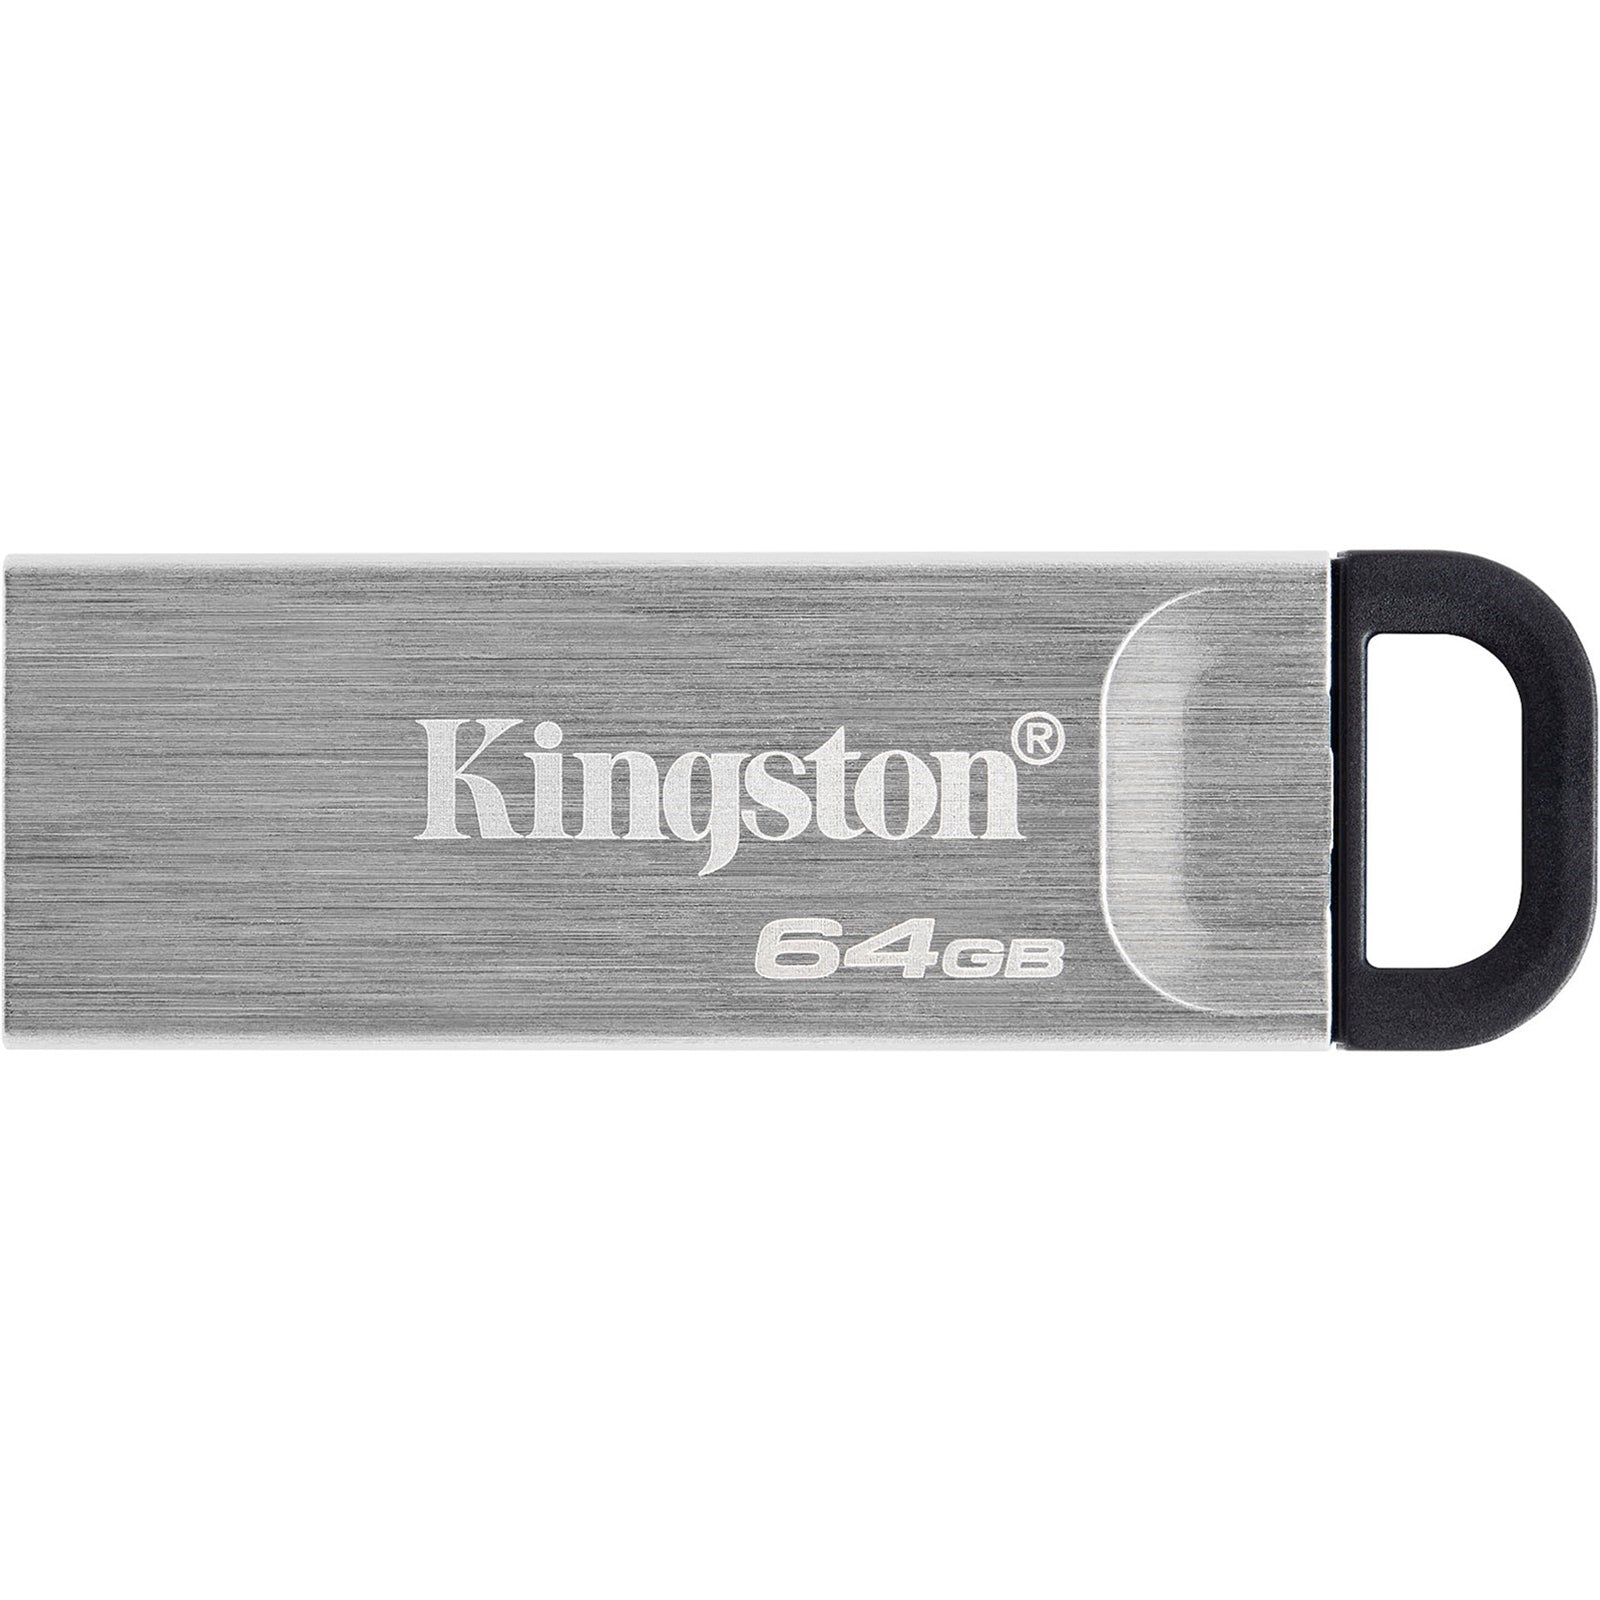 Kingston Kyson 64GB High-Speed USB 3.2 Flash Drive Durable Metal Casing